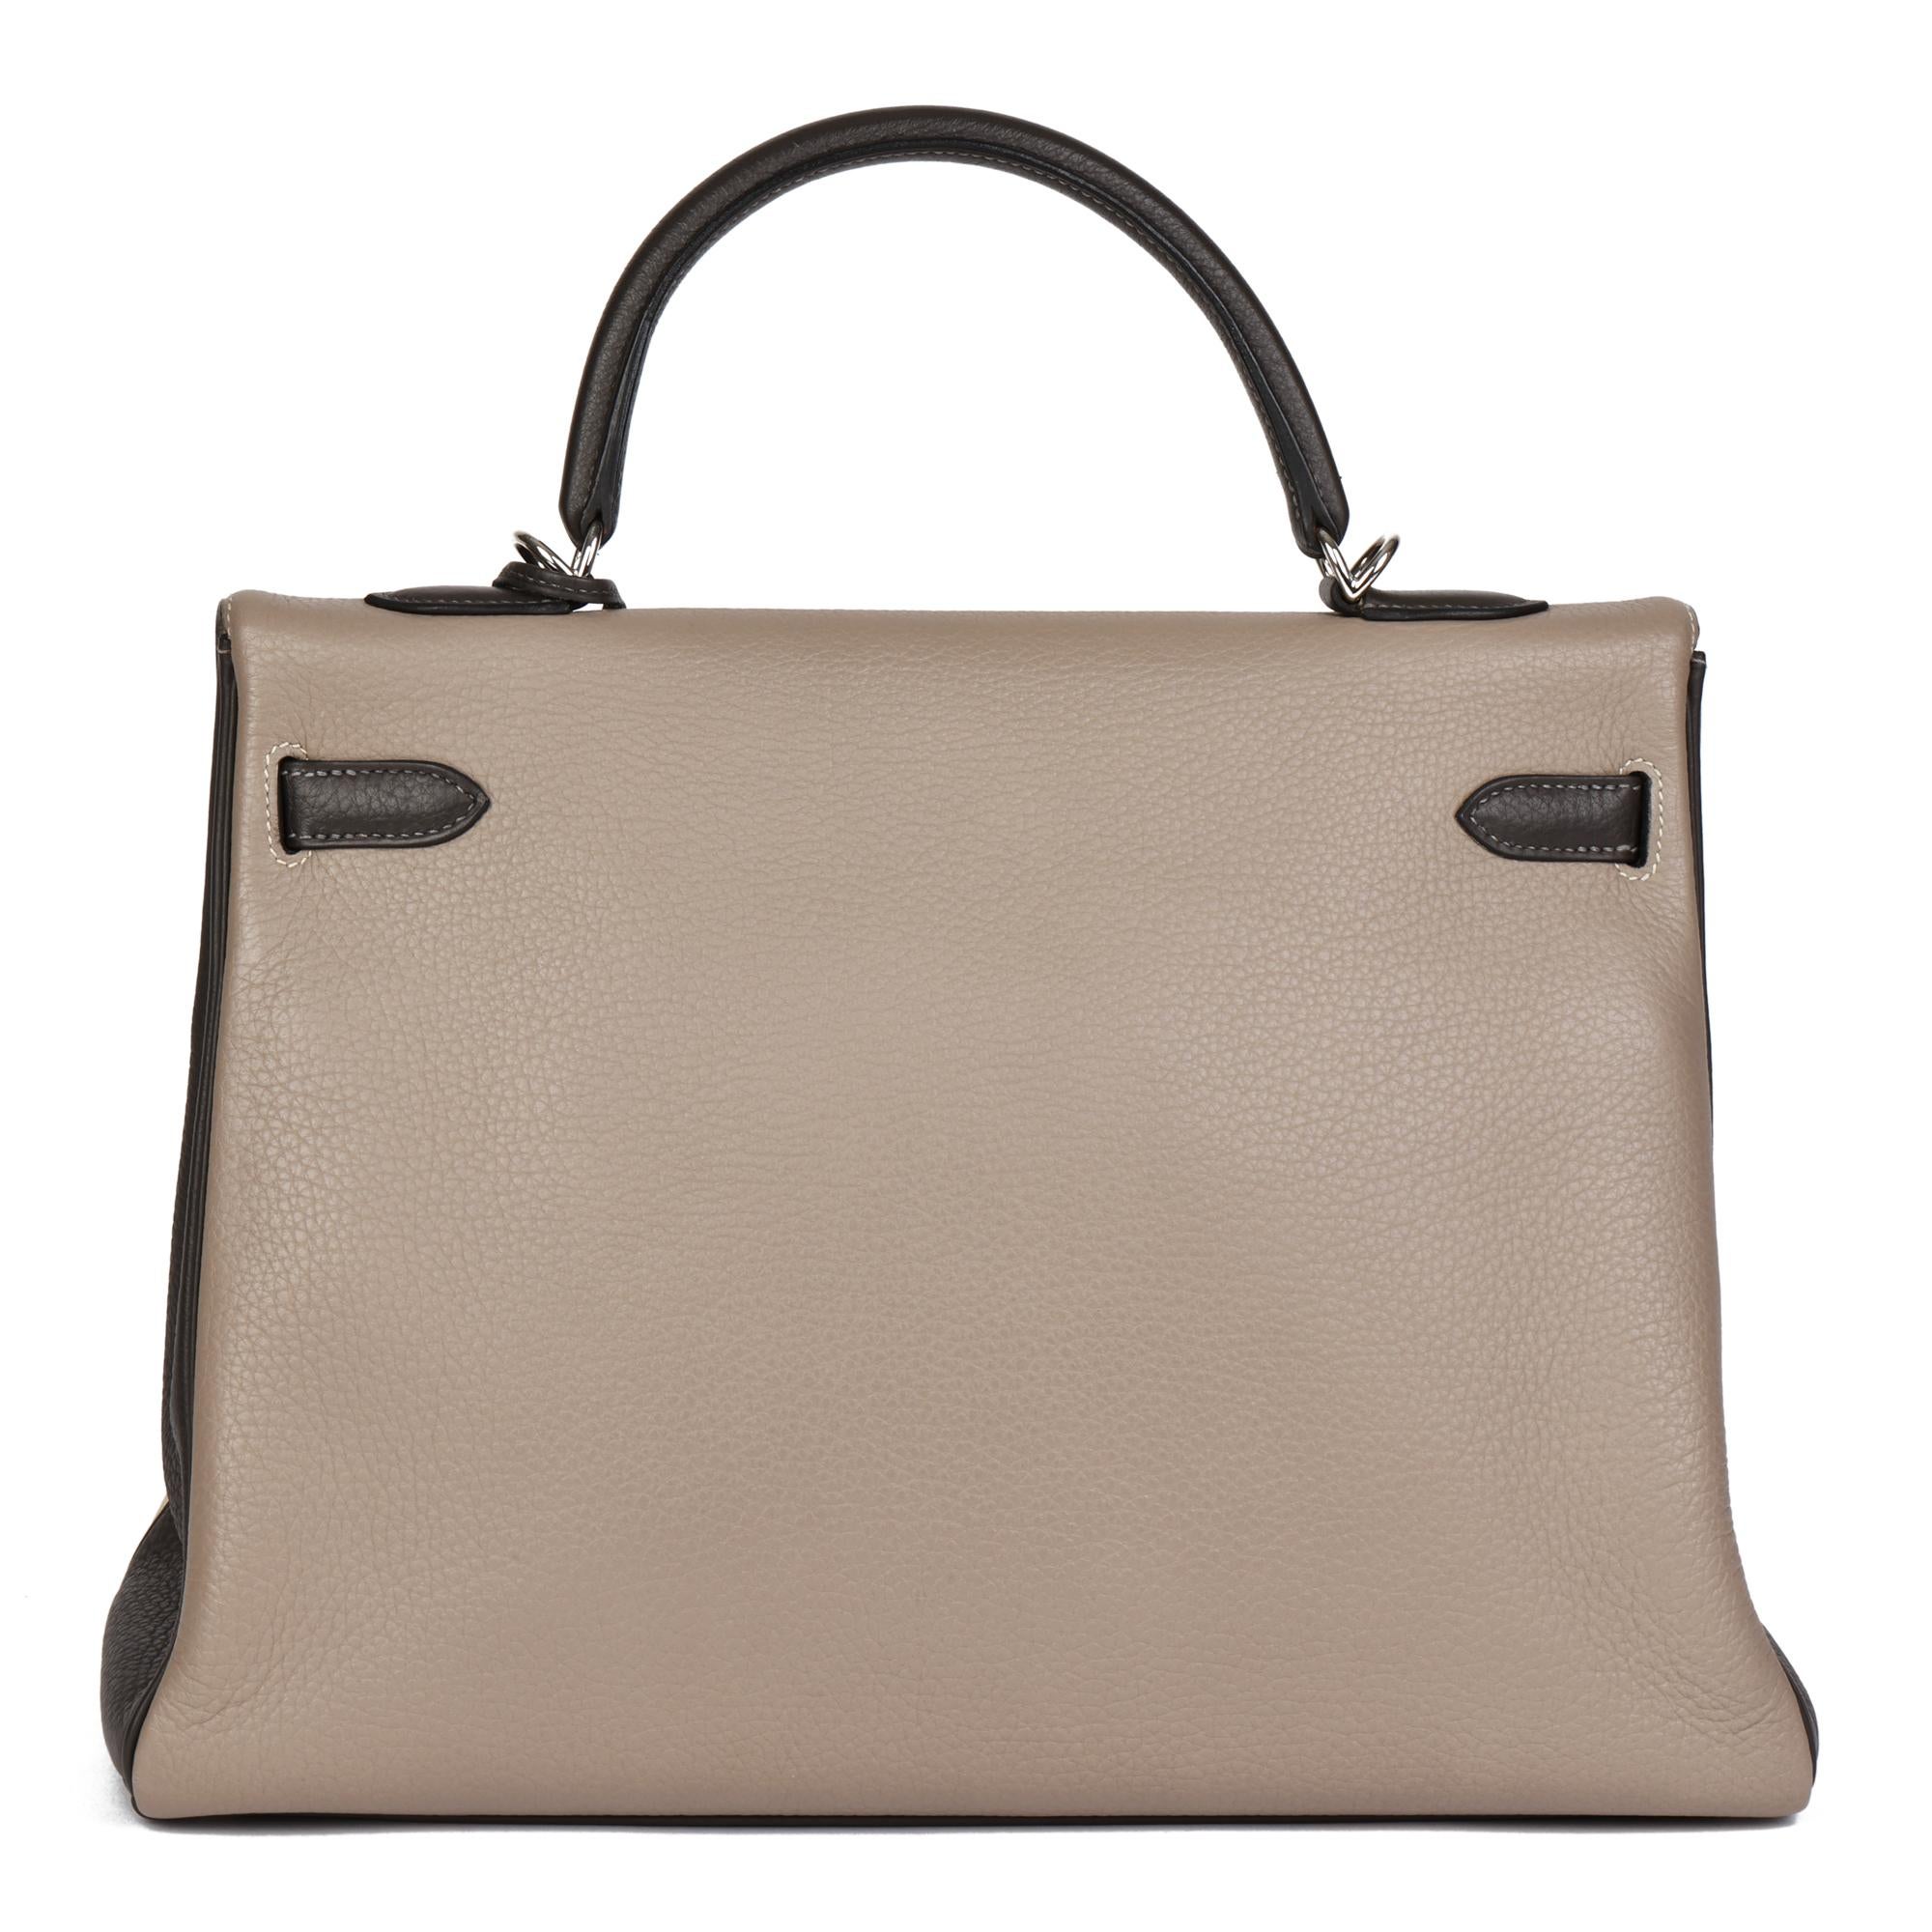 Etoupe 35cm Genuine Leather Shopper Tote Handbag Top Handle Satchel